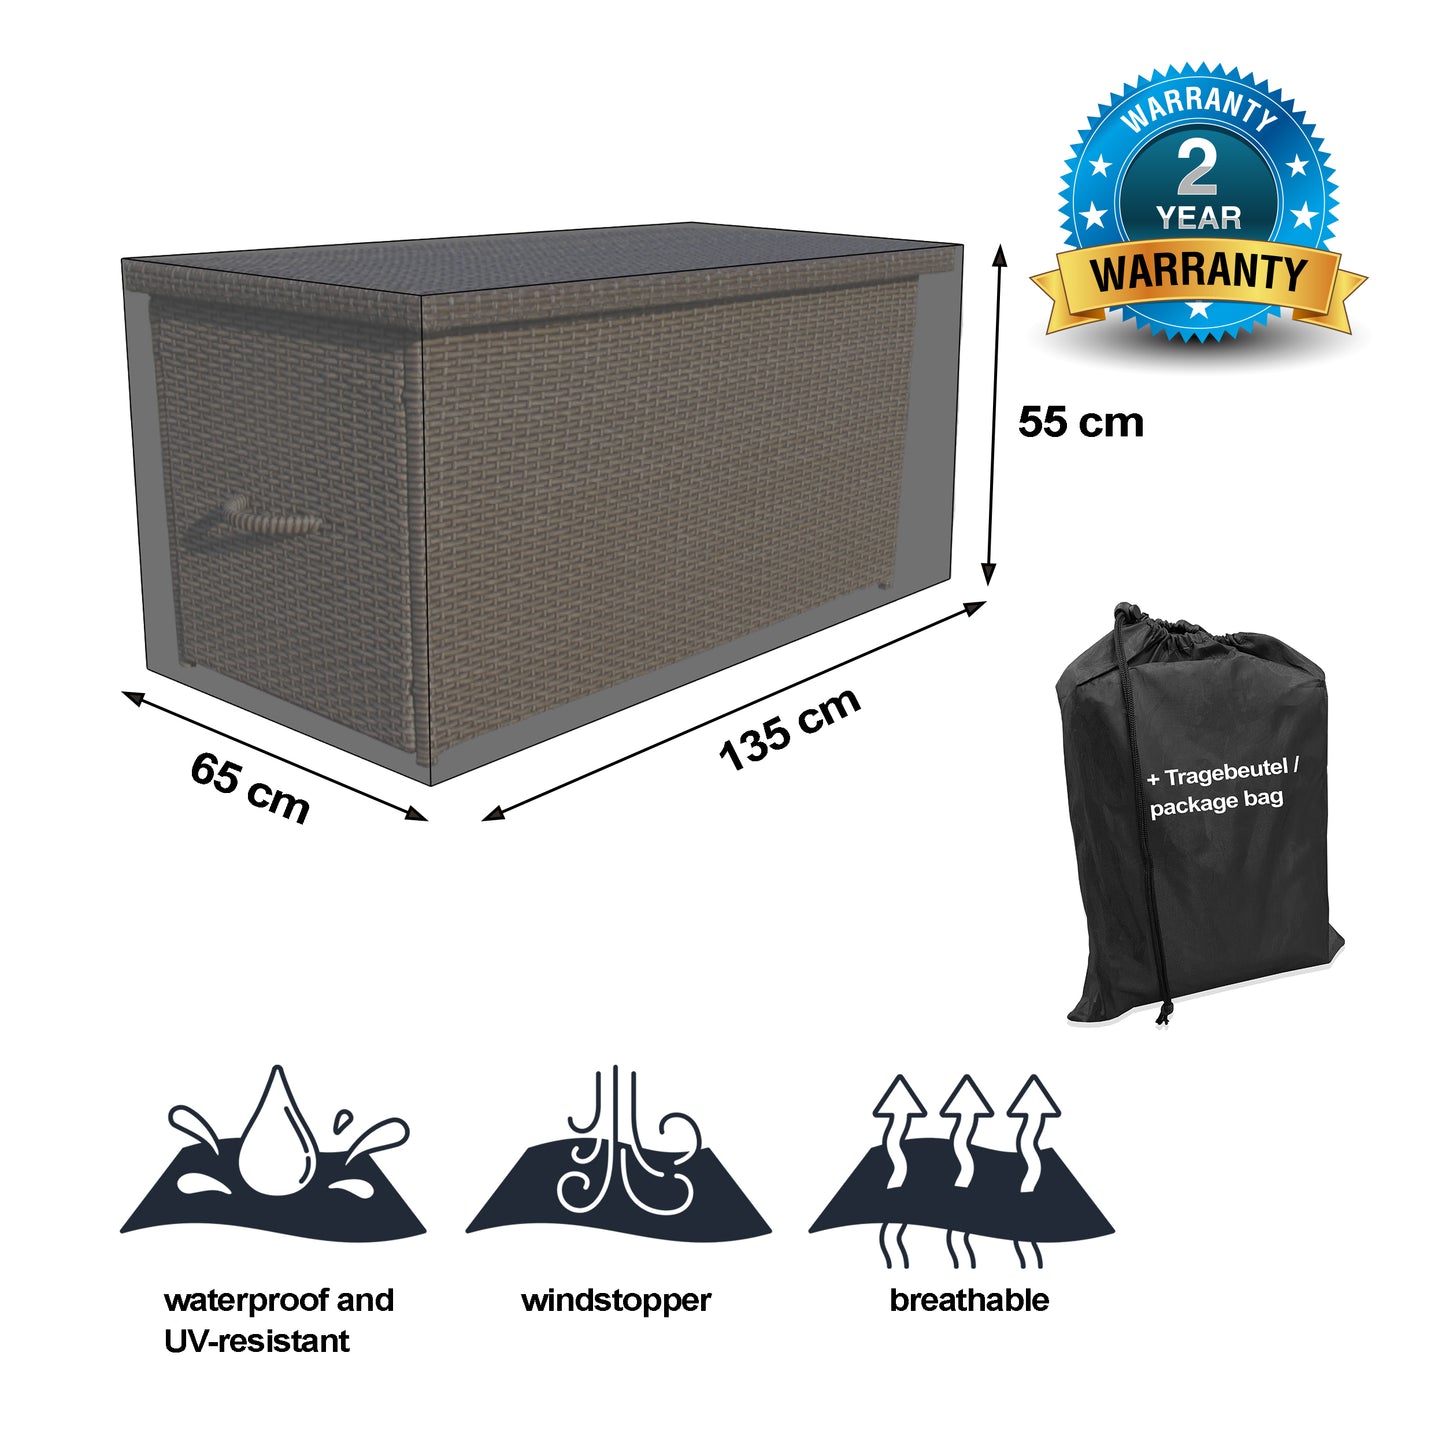 Black Premium Kissenboxhülle 135x65x55cm  / cushion box cover / atmungsaktiv /  breathable